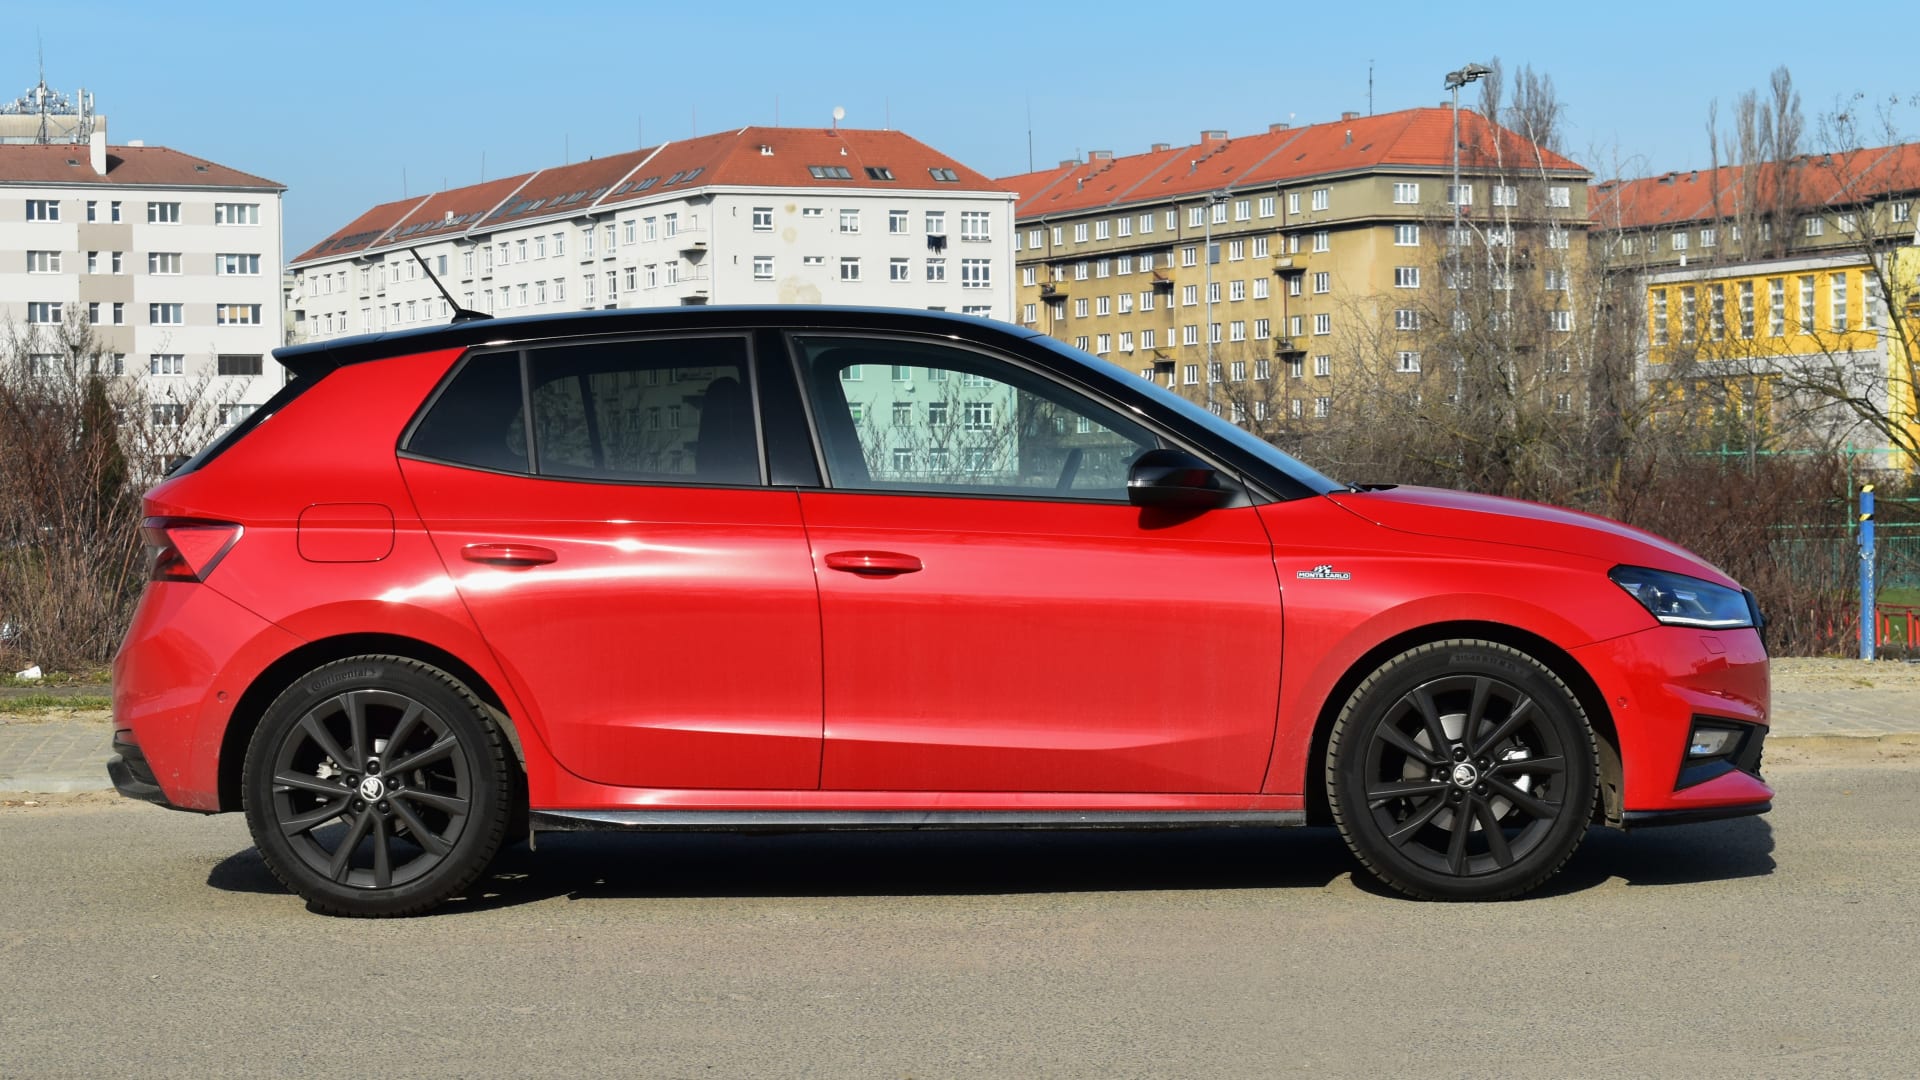 TEST: Škoda Fabia 1.5 TSI Monte Carlo se tváří jako „ereso“ aspoň navenek